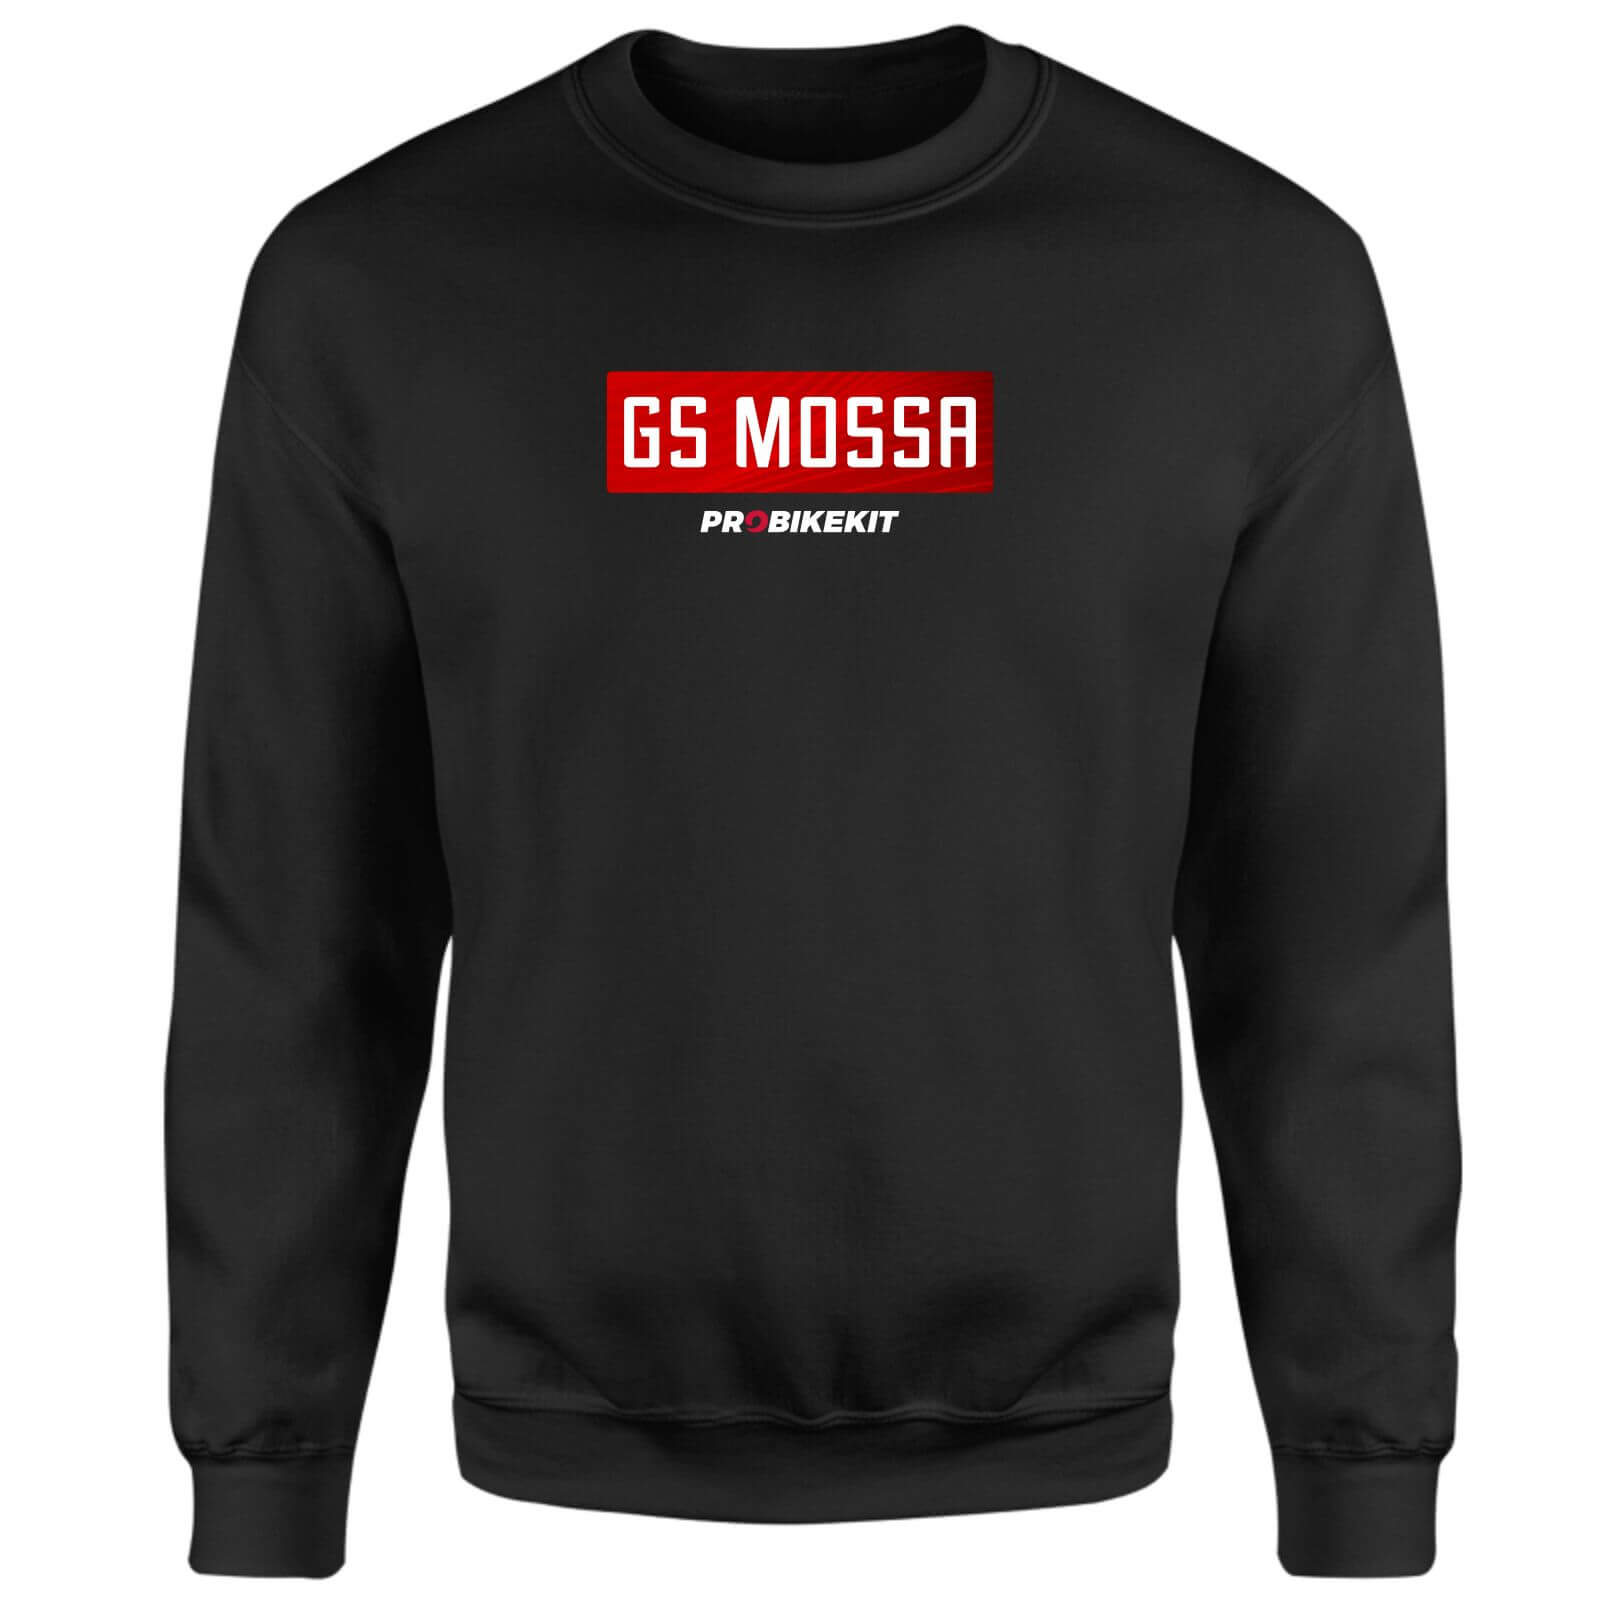 PBK GS Mossa Boxed Chest Logo Sweatshirt - Black - M - Black